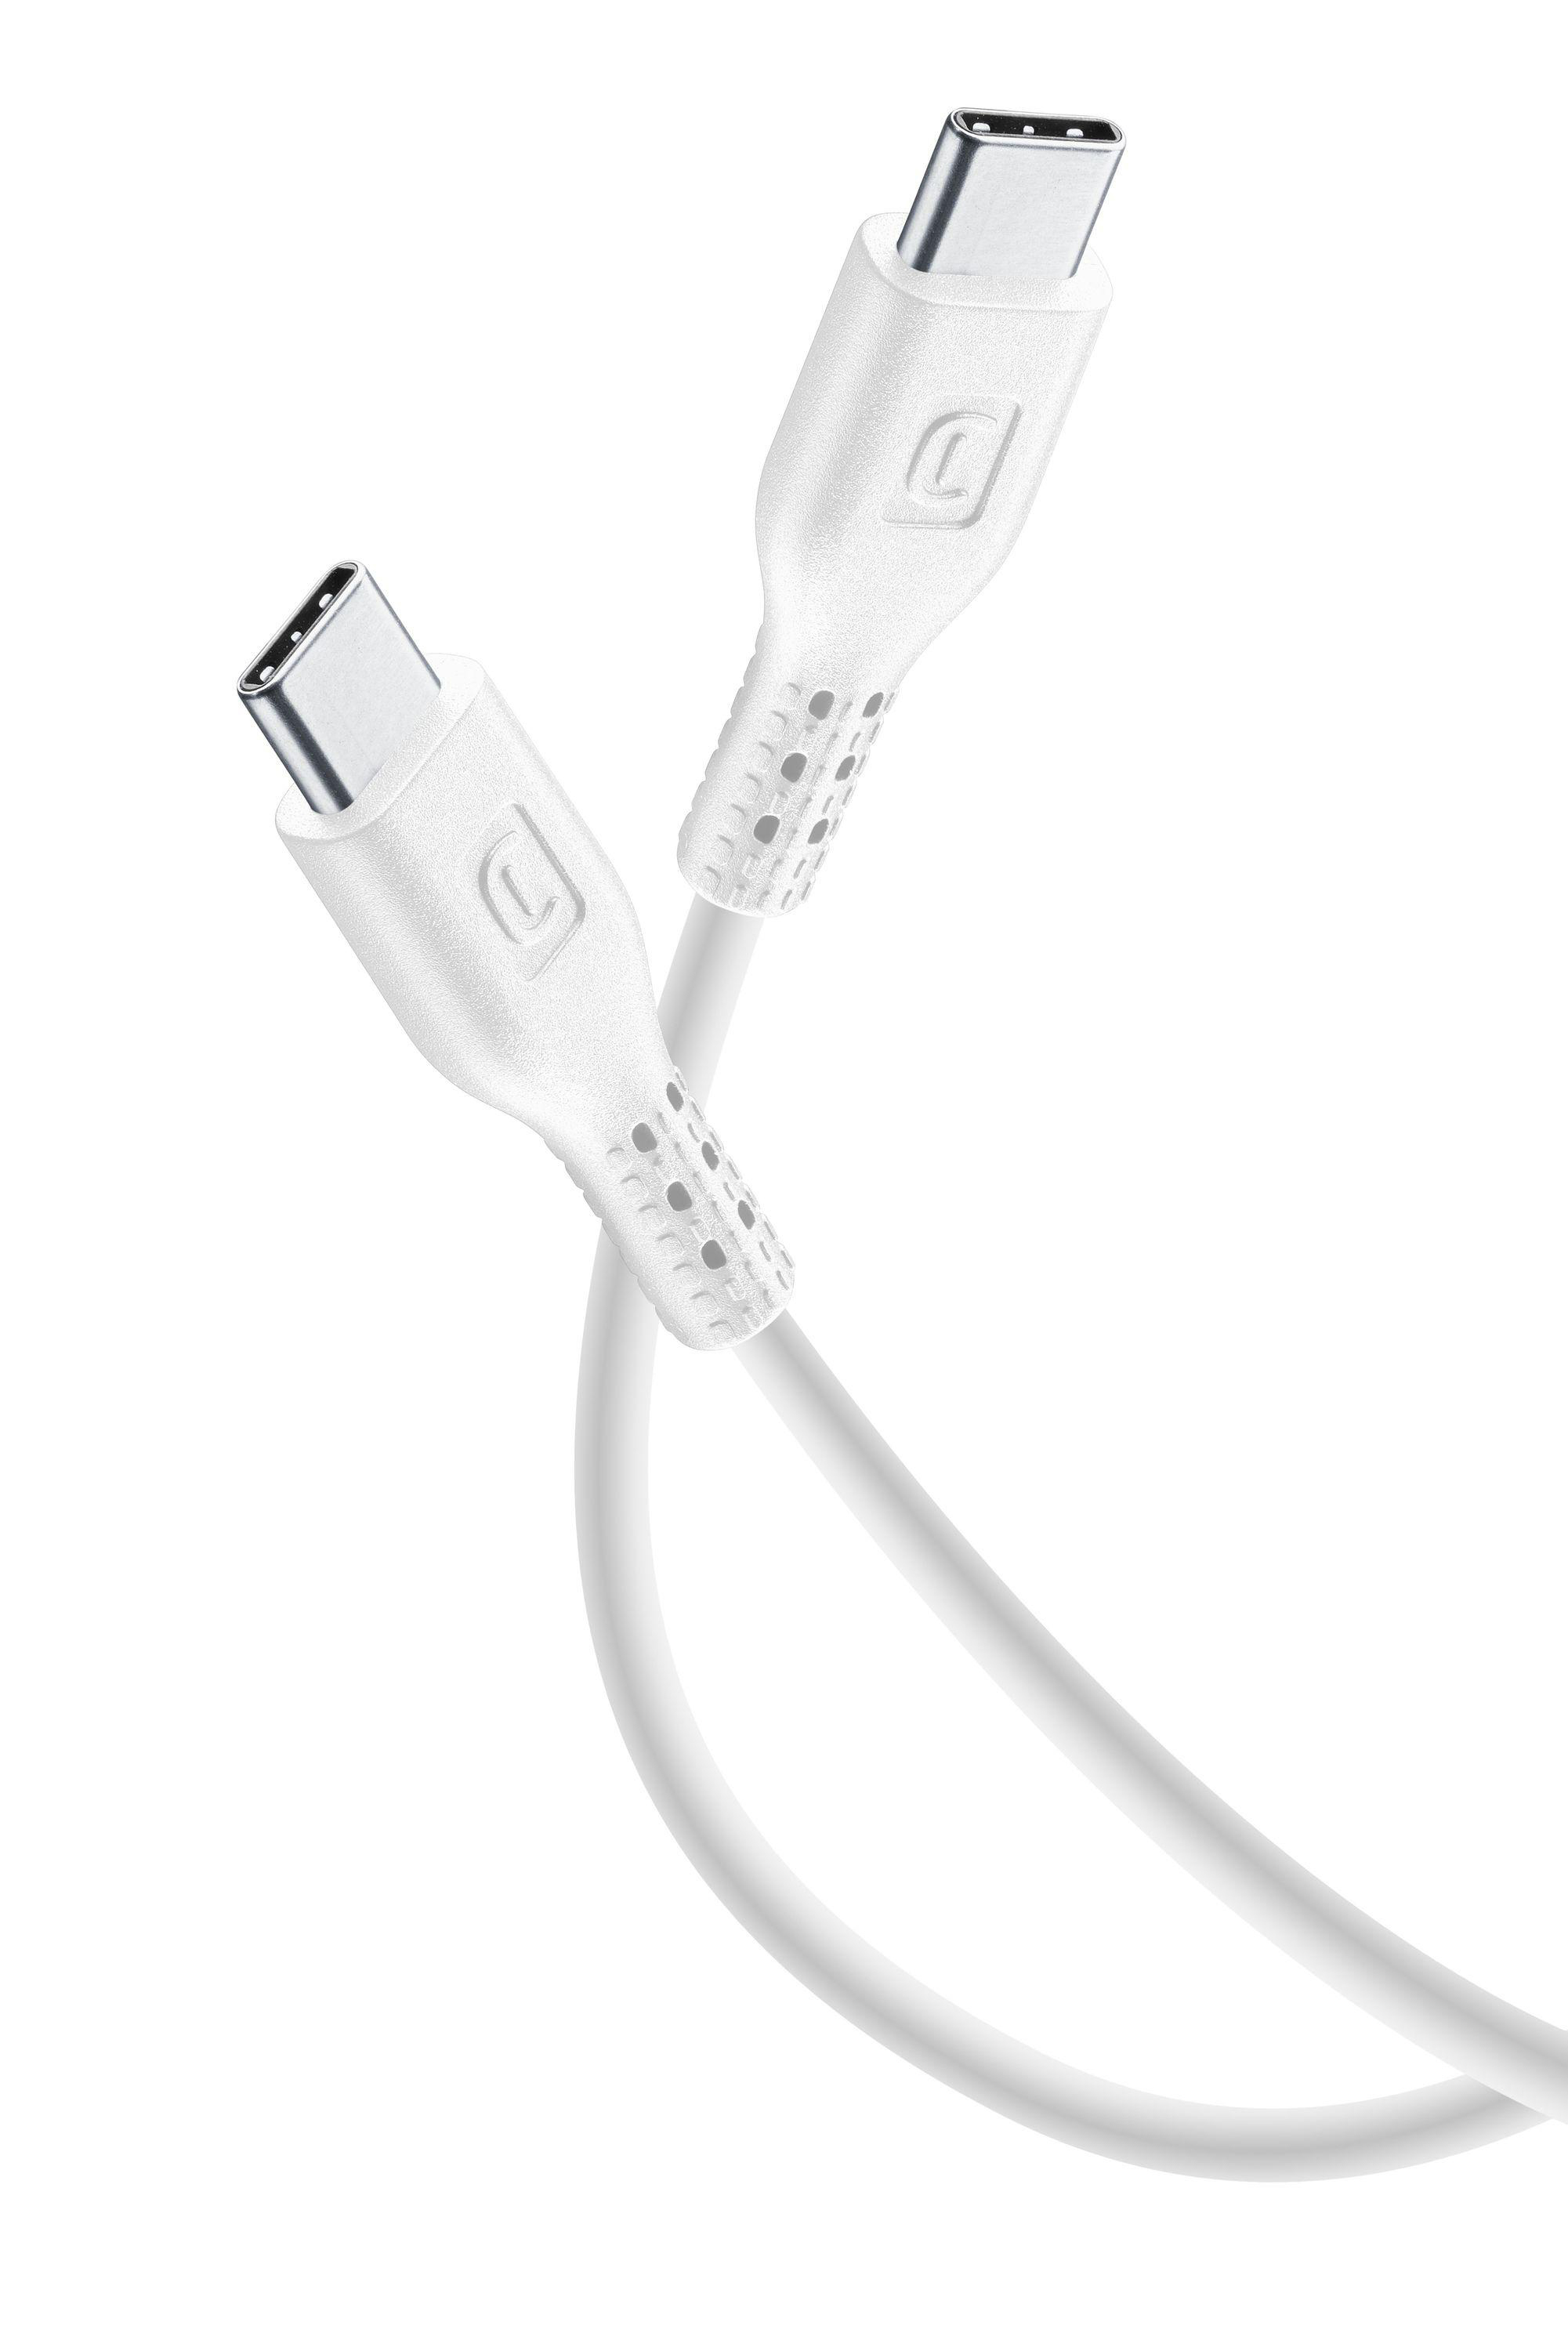 CELLULAR LINE Power Weiß USB-C, Datenkabel/Ladekabel, 2 Cable m, USB-C auf